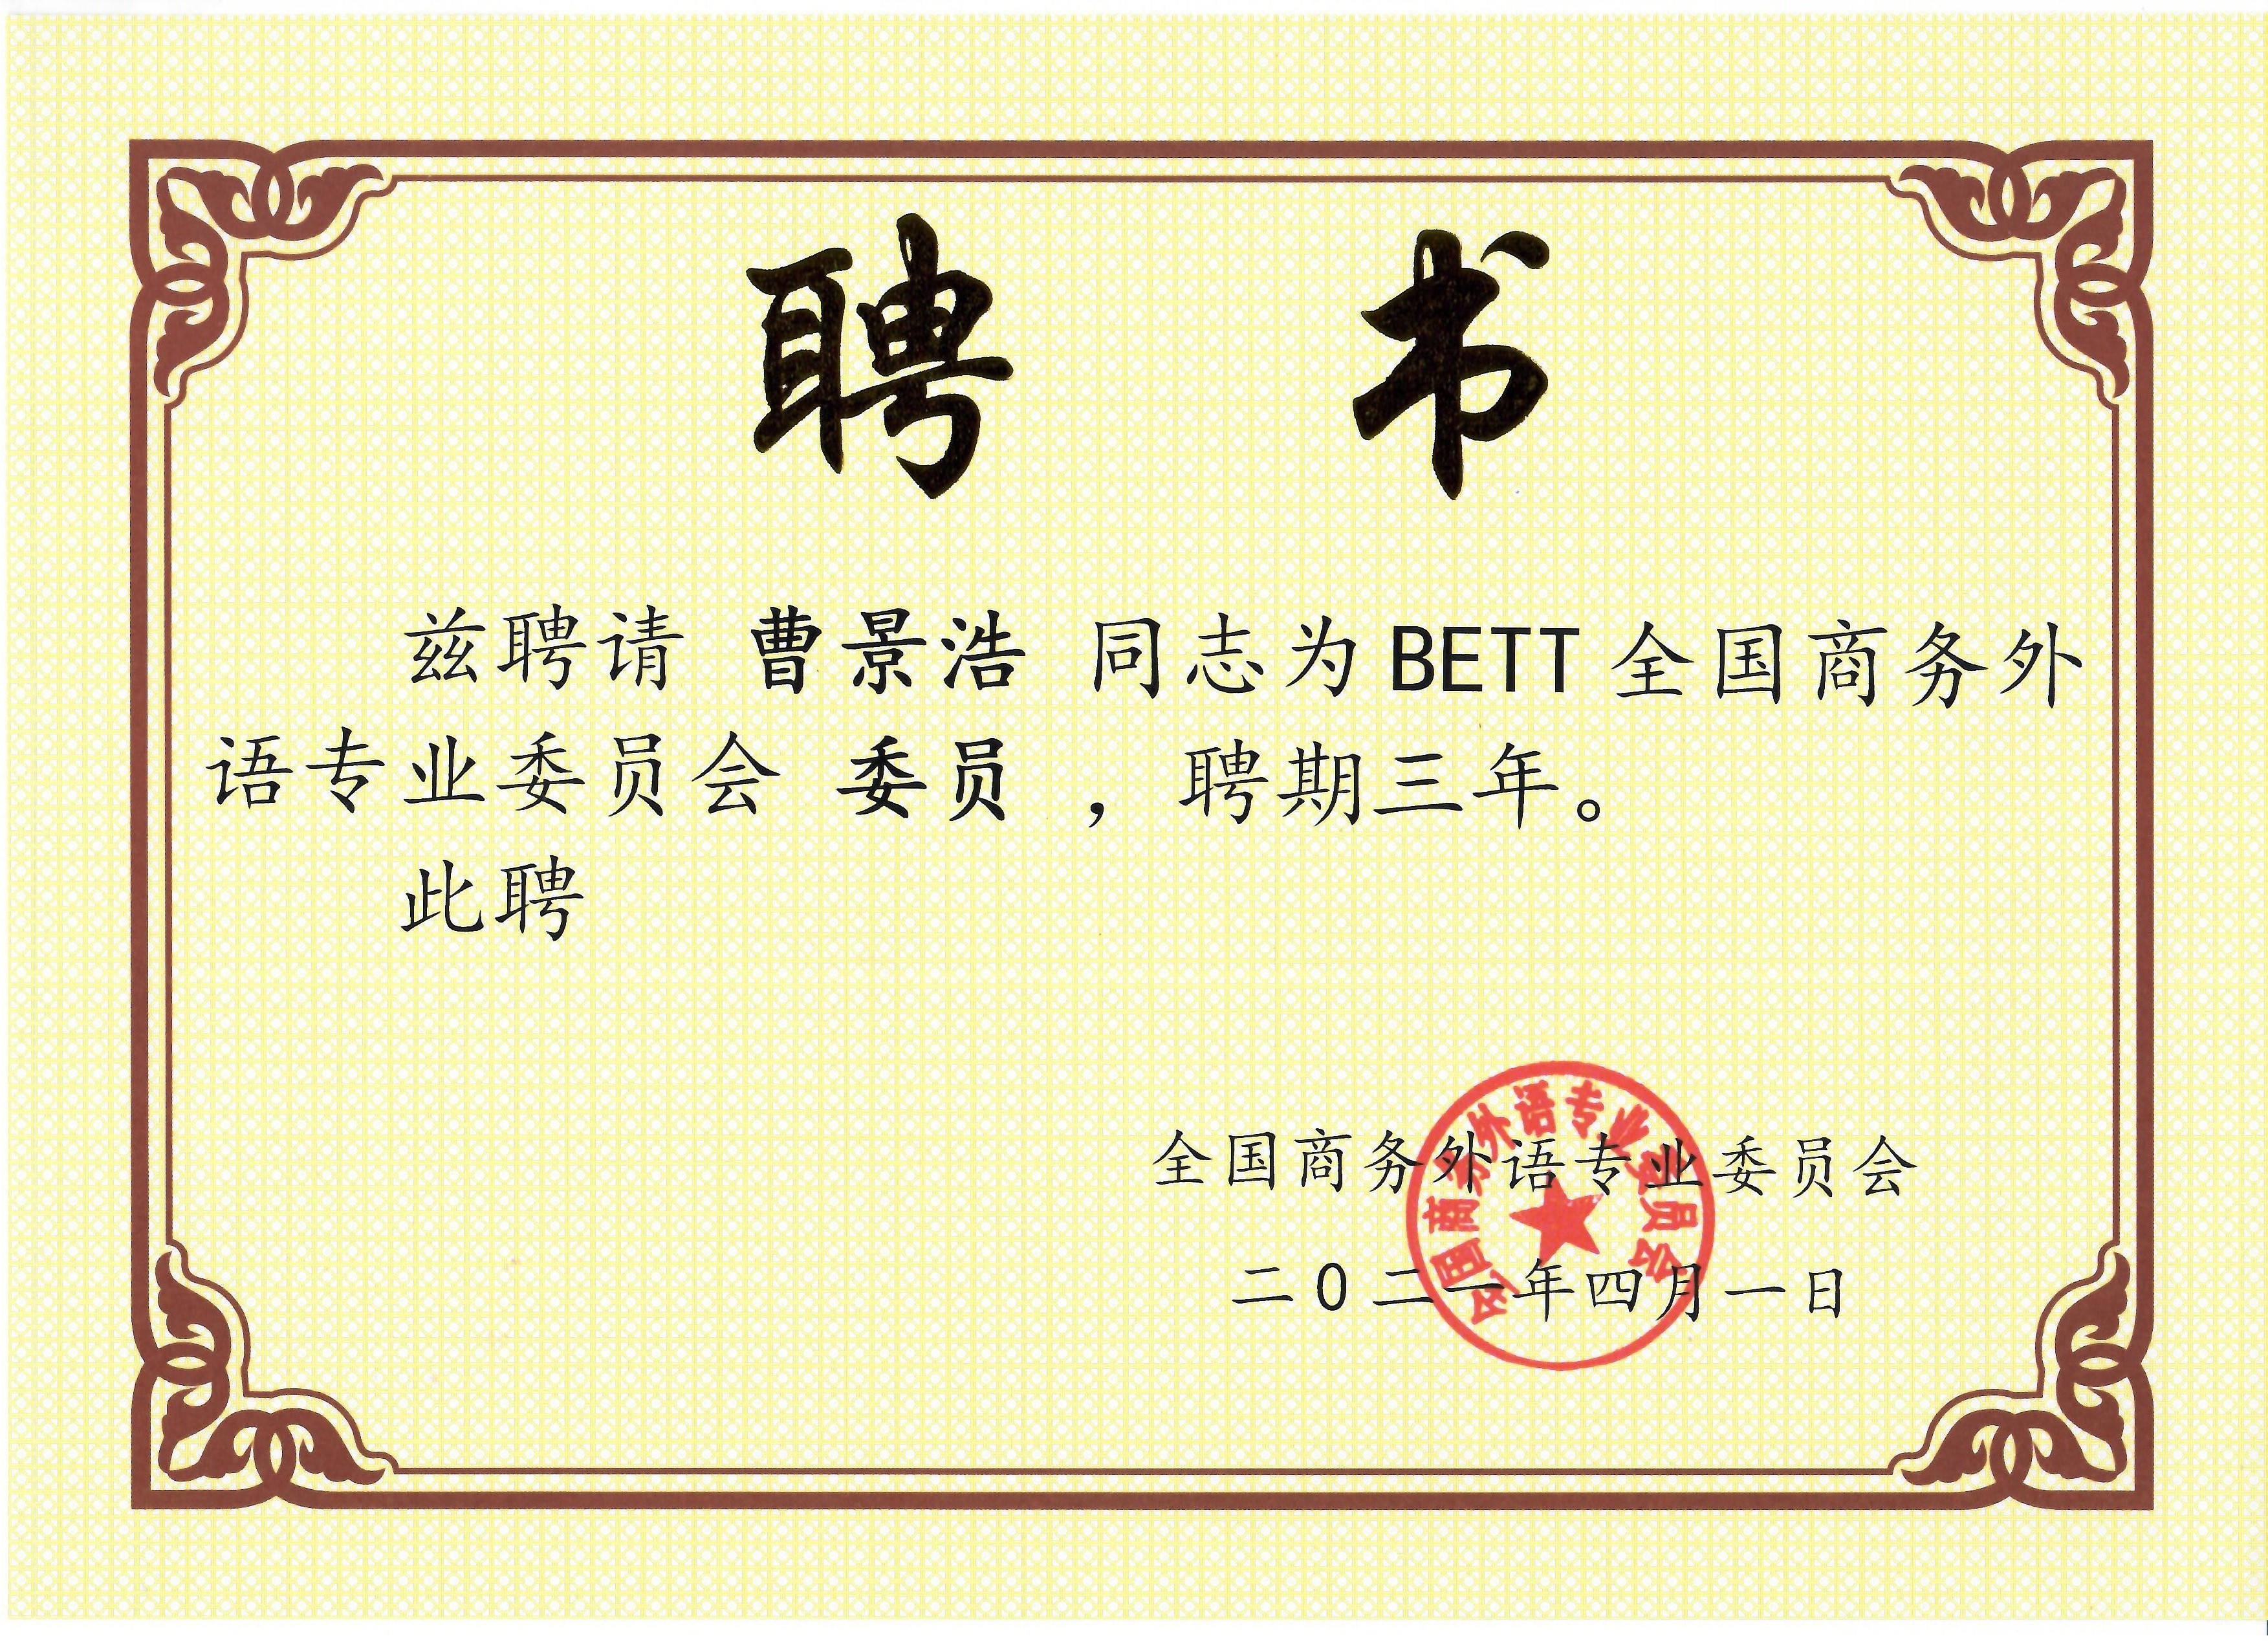 BETT专家委员证书